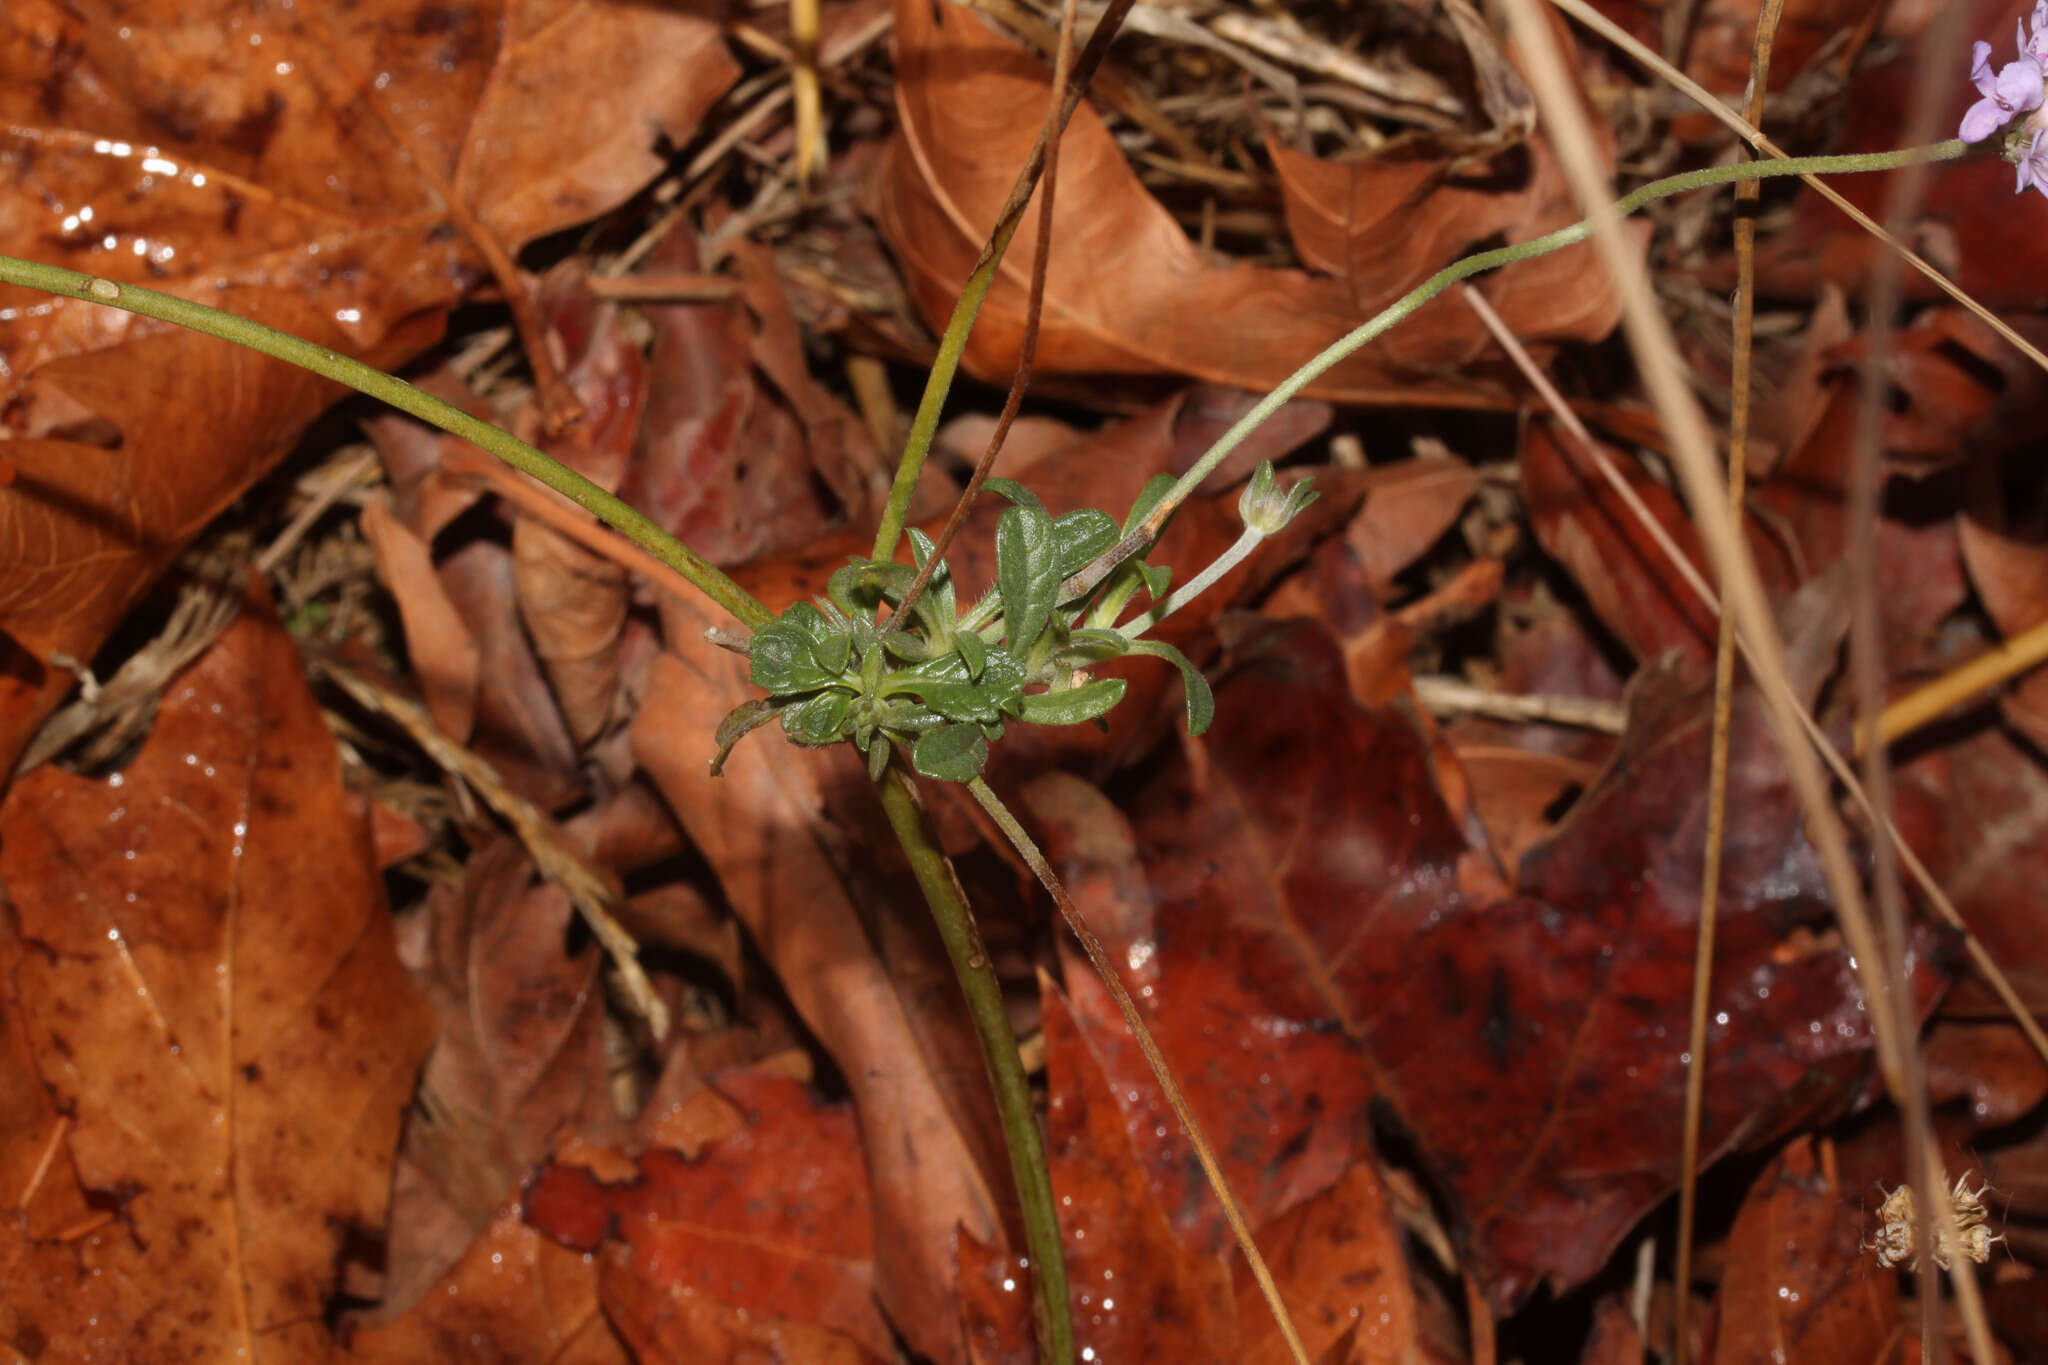 Sivun Lomelosia brachiata (Sm.) W. Greuter & Burdet kuva